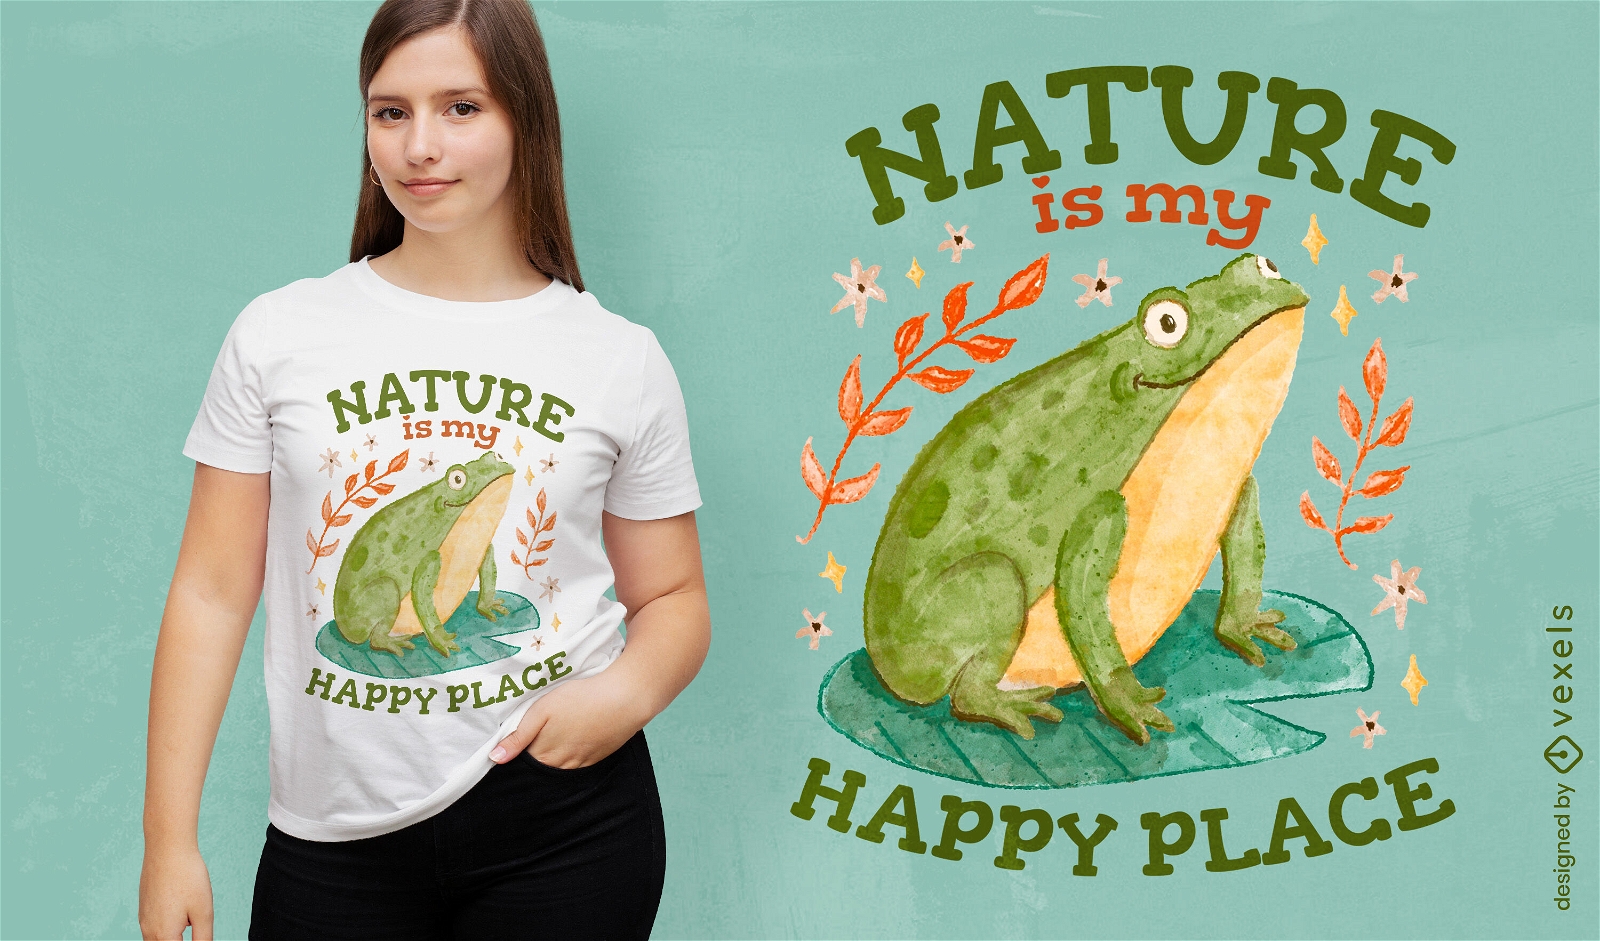 Dise?o de camiseta del santuario natural de la rana verde.